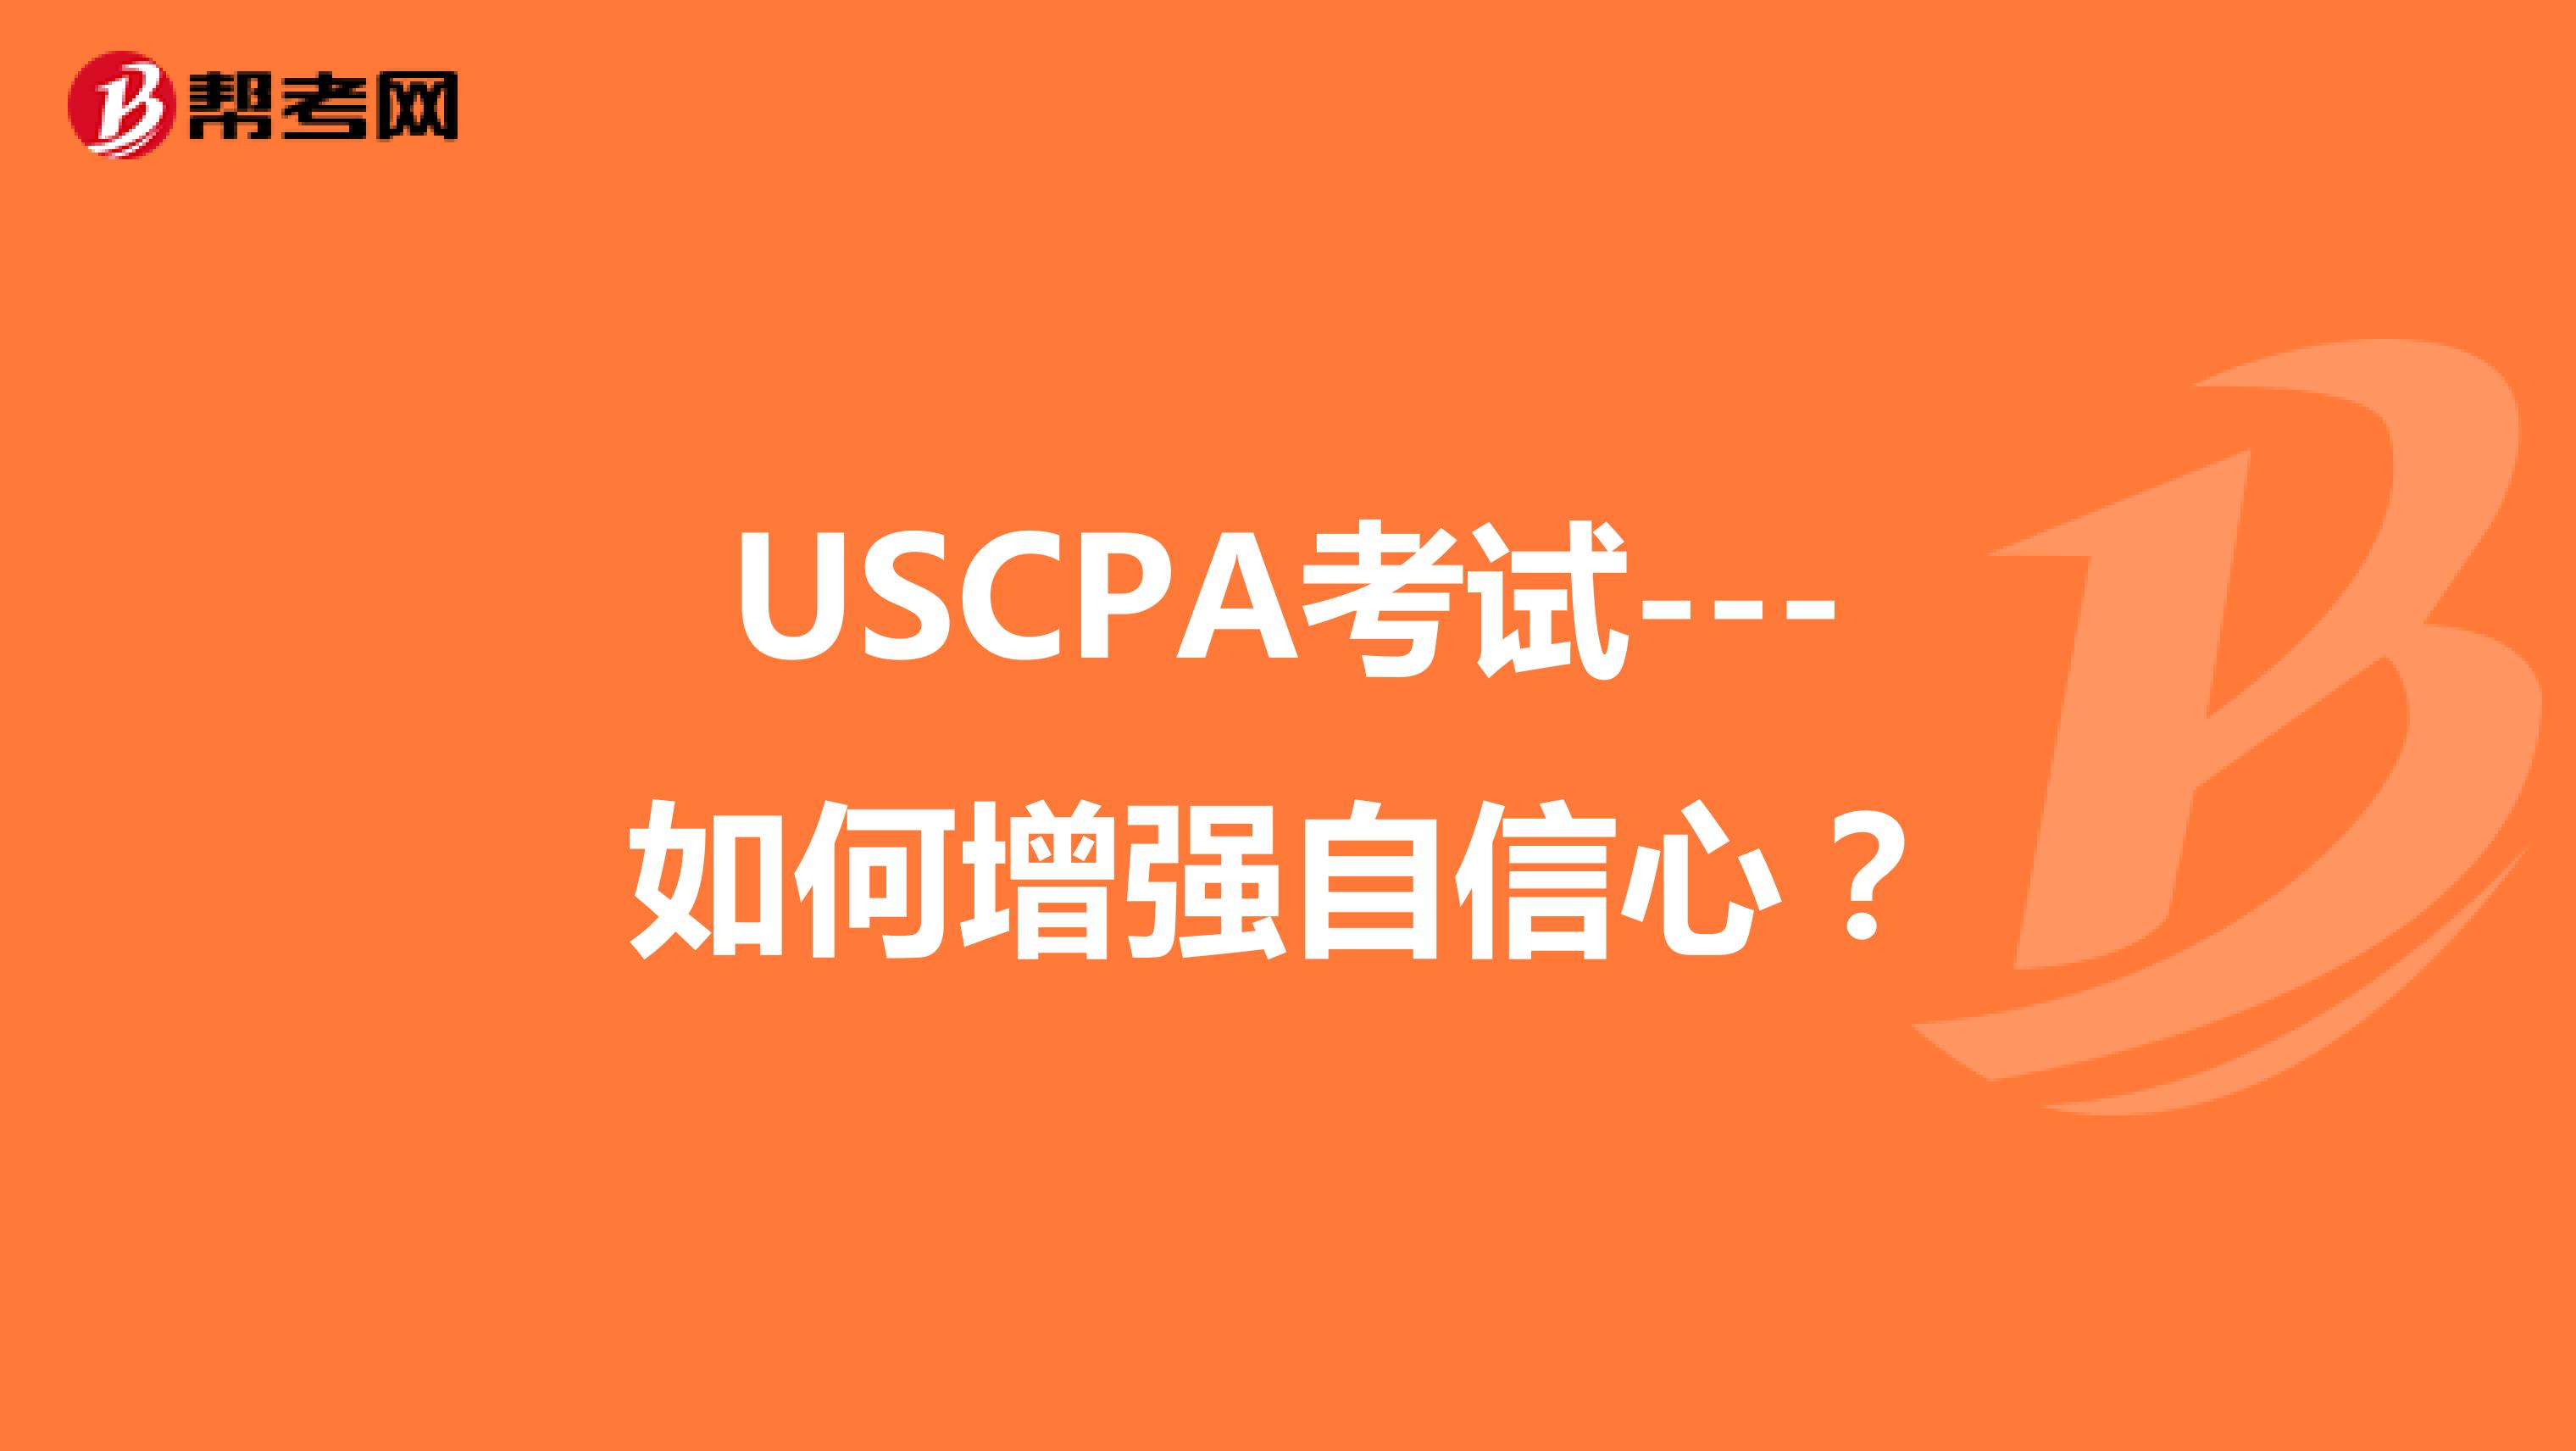 USCPA考试---如何增强自信心？